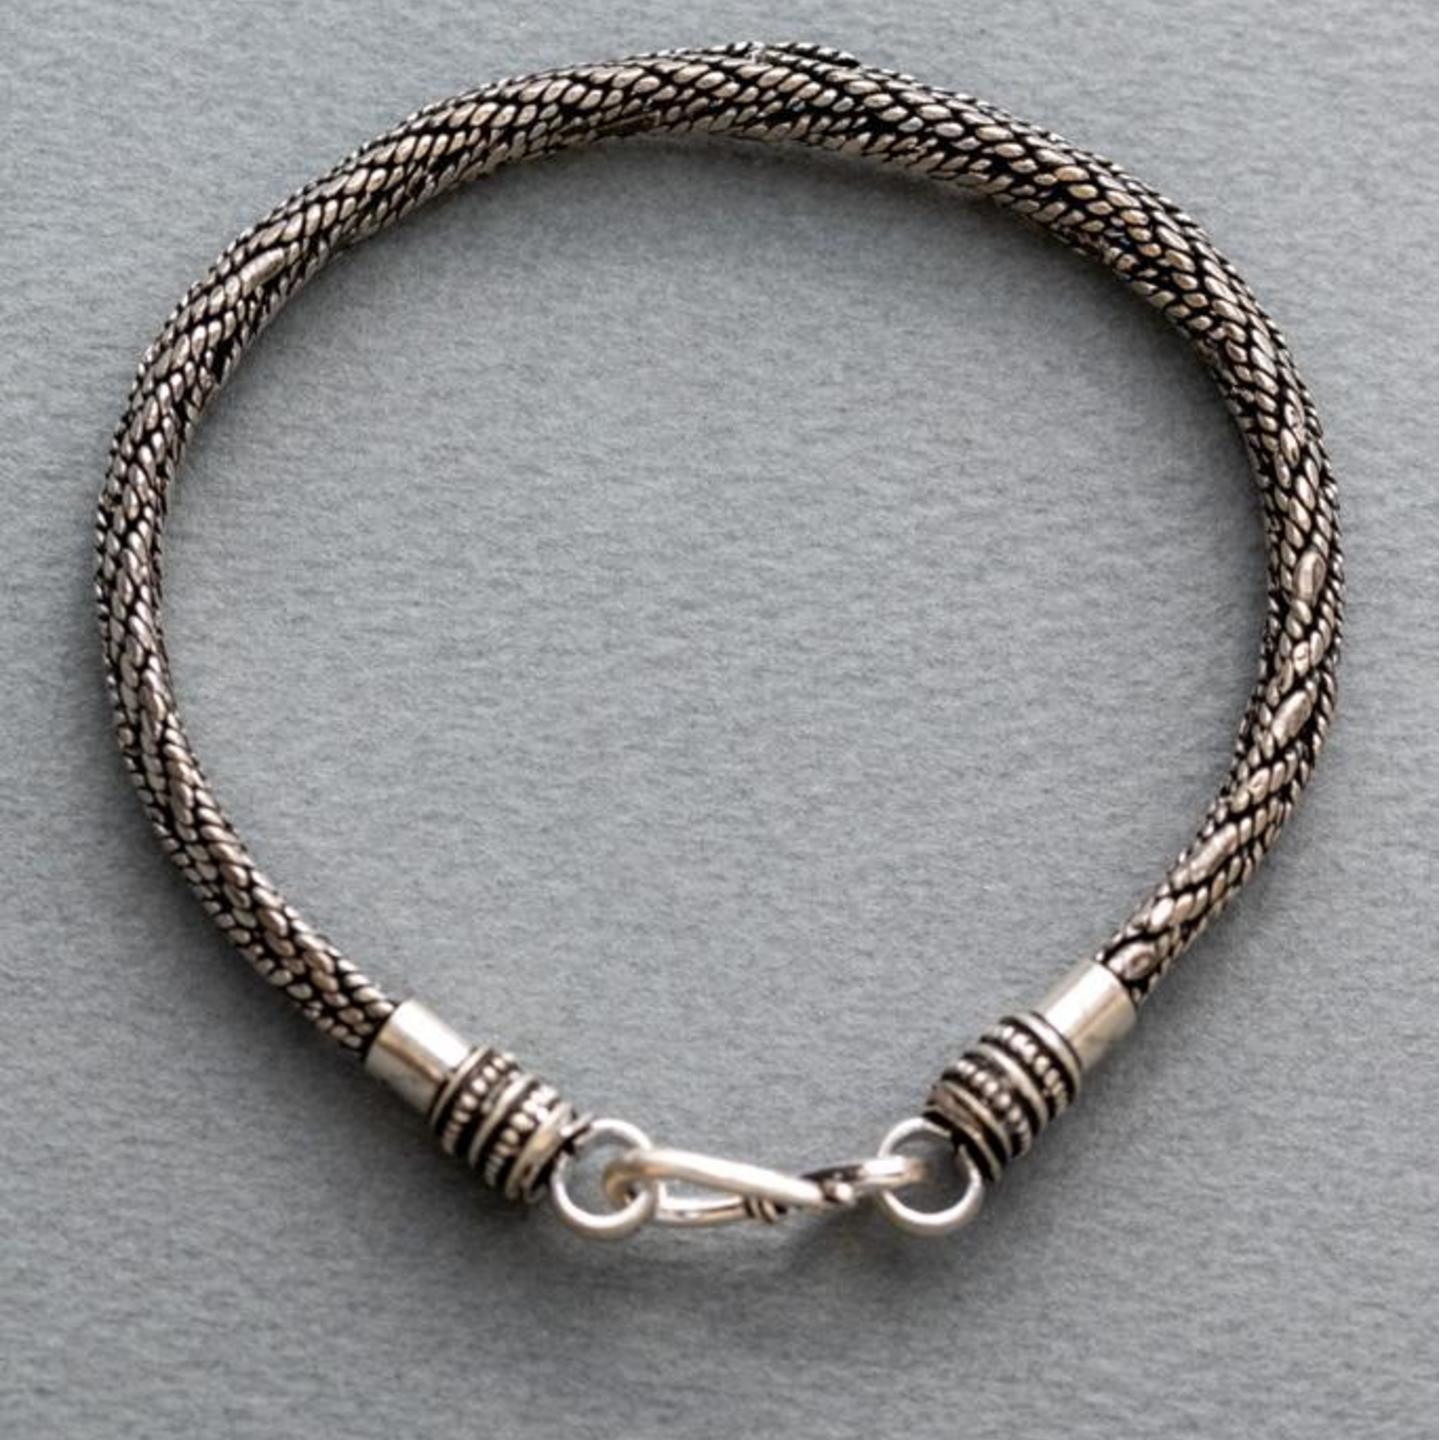 925 Solid Sterling Silver Handmade Bracelet - Length 8.25 Inches - Designer Mens Silver Bracelet - Oxidized Jewelry 38gm